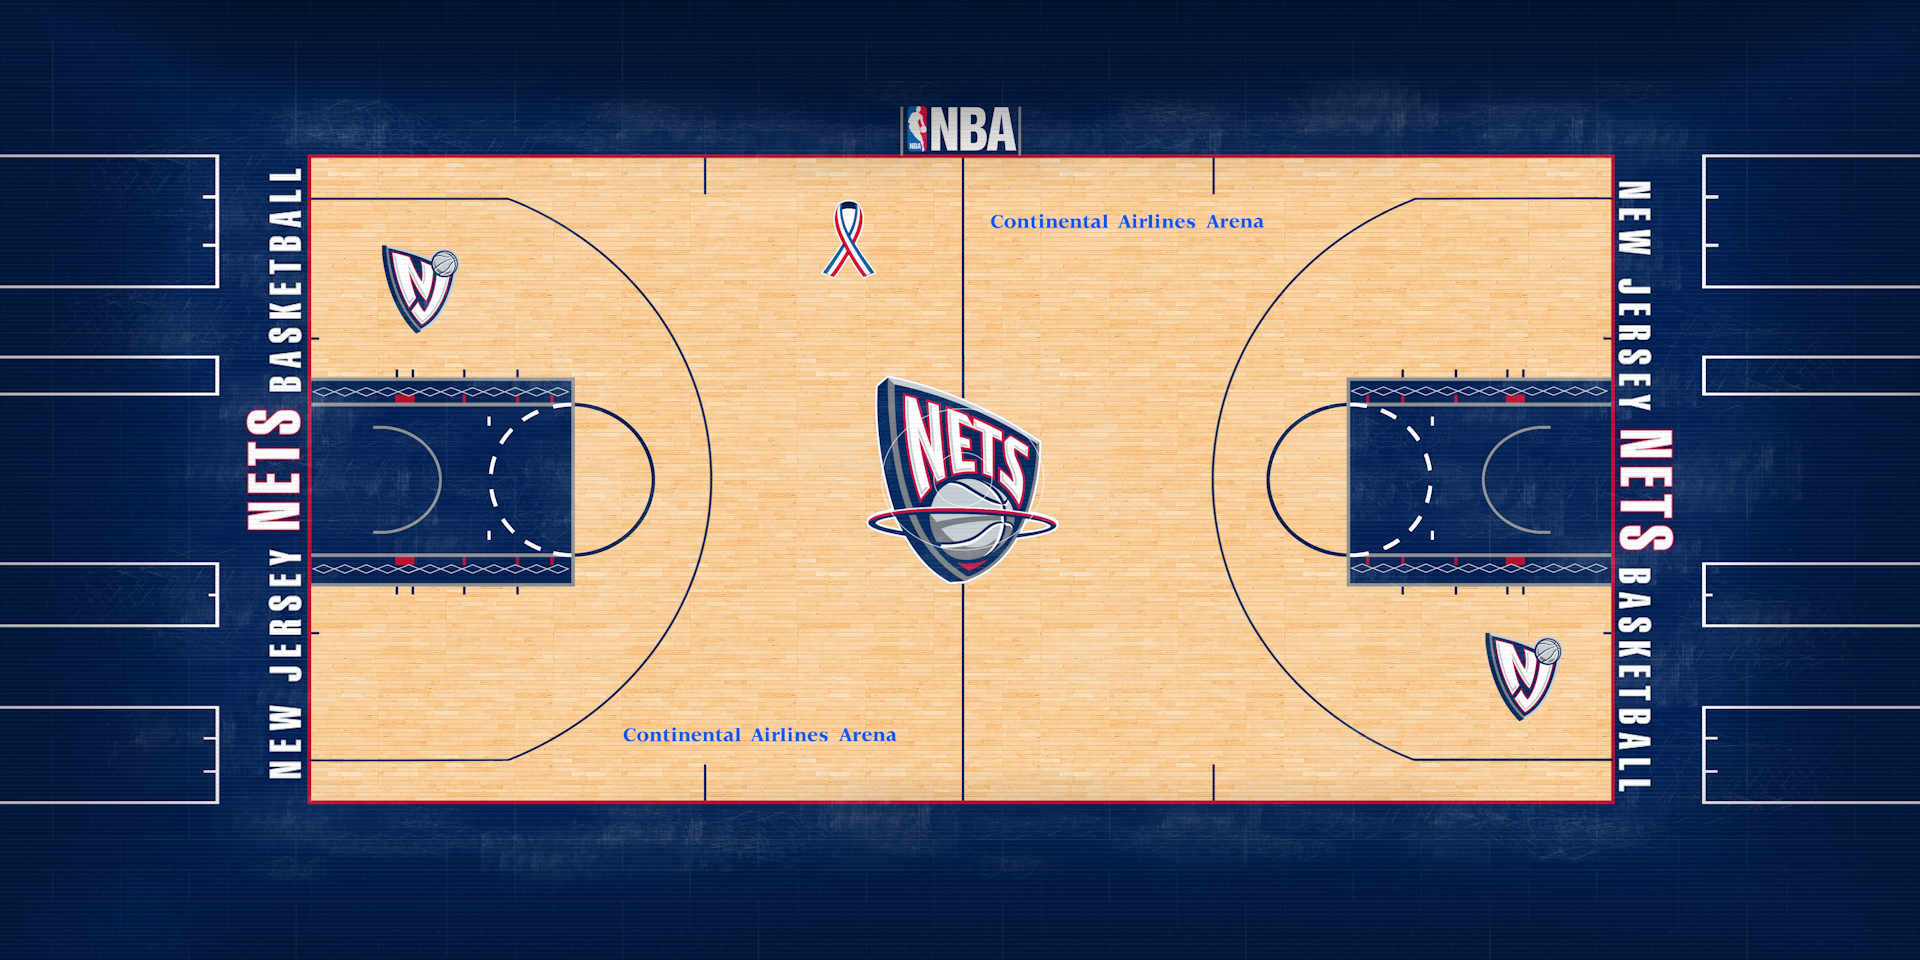 Former New Jersey Nets Court  Nba arenas, New jersey, Court